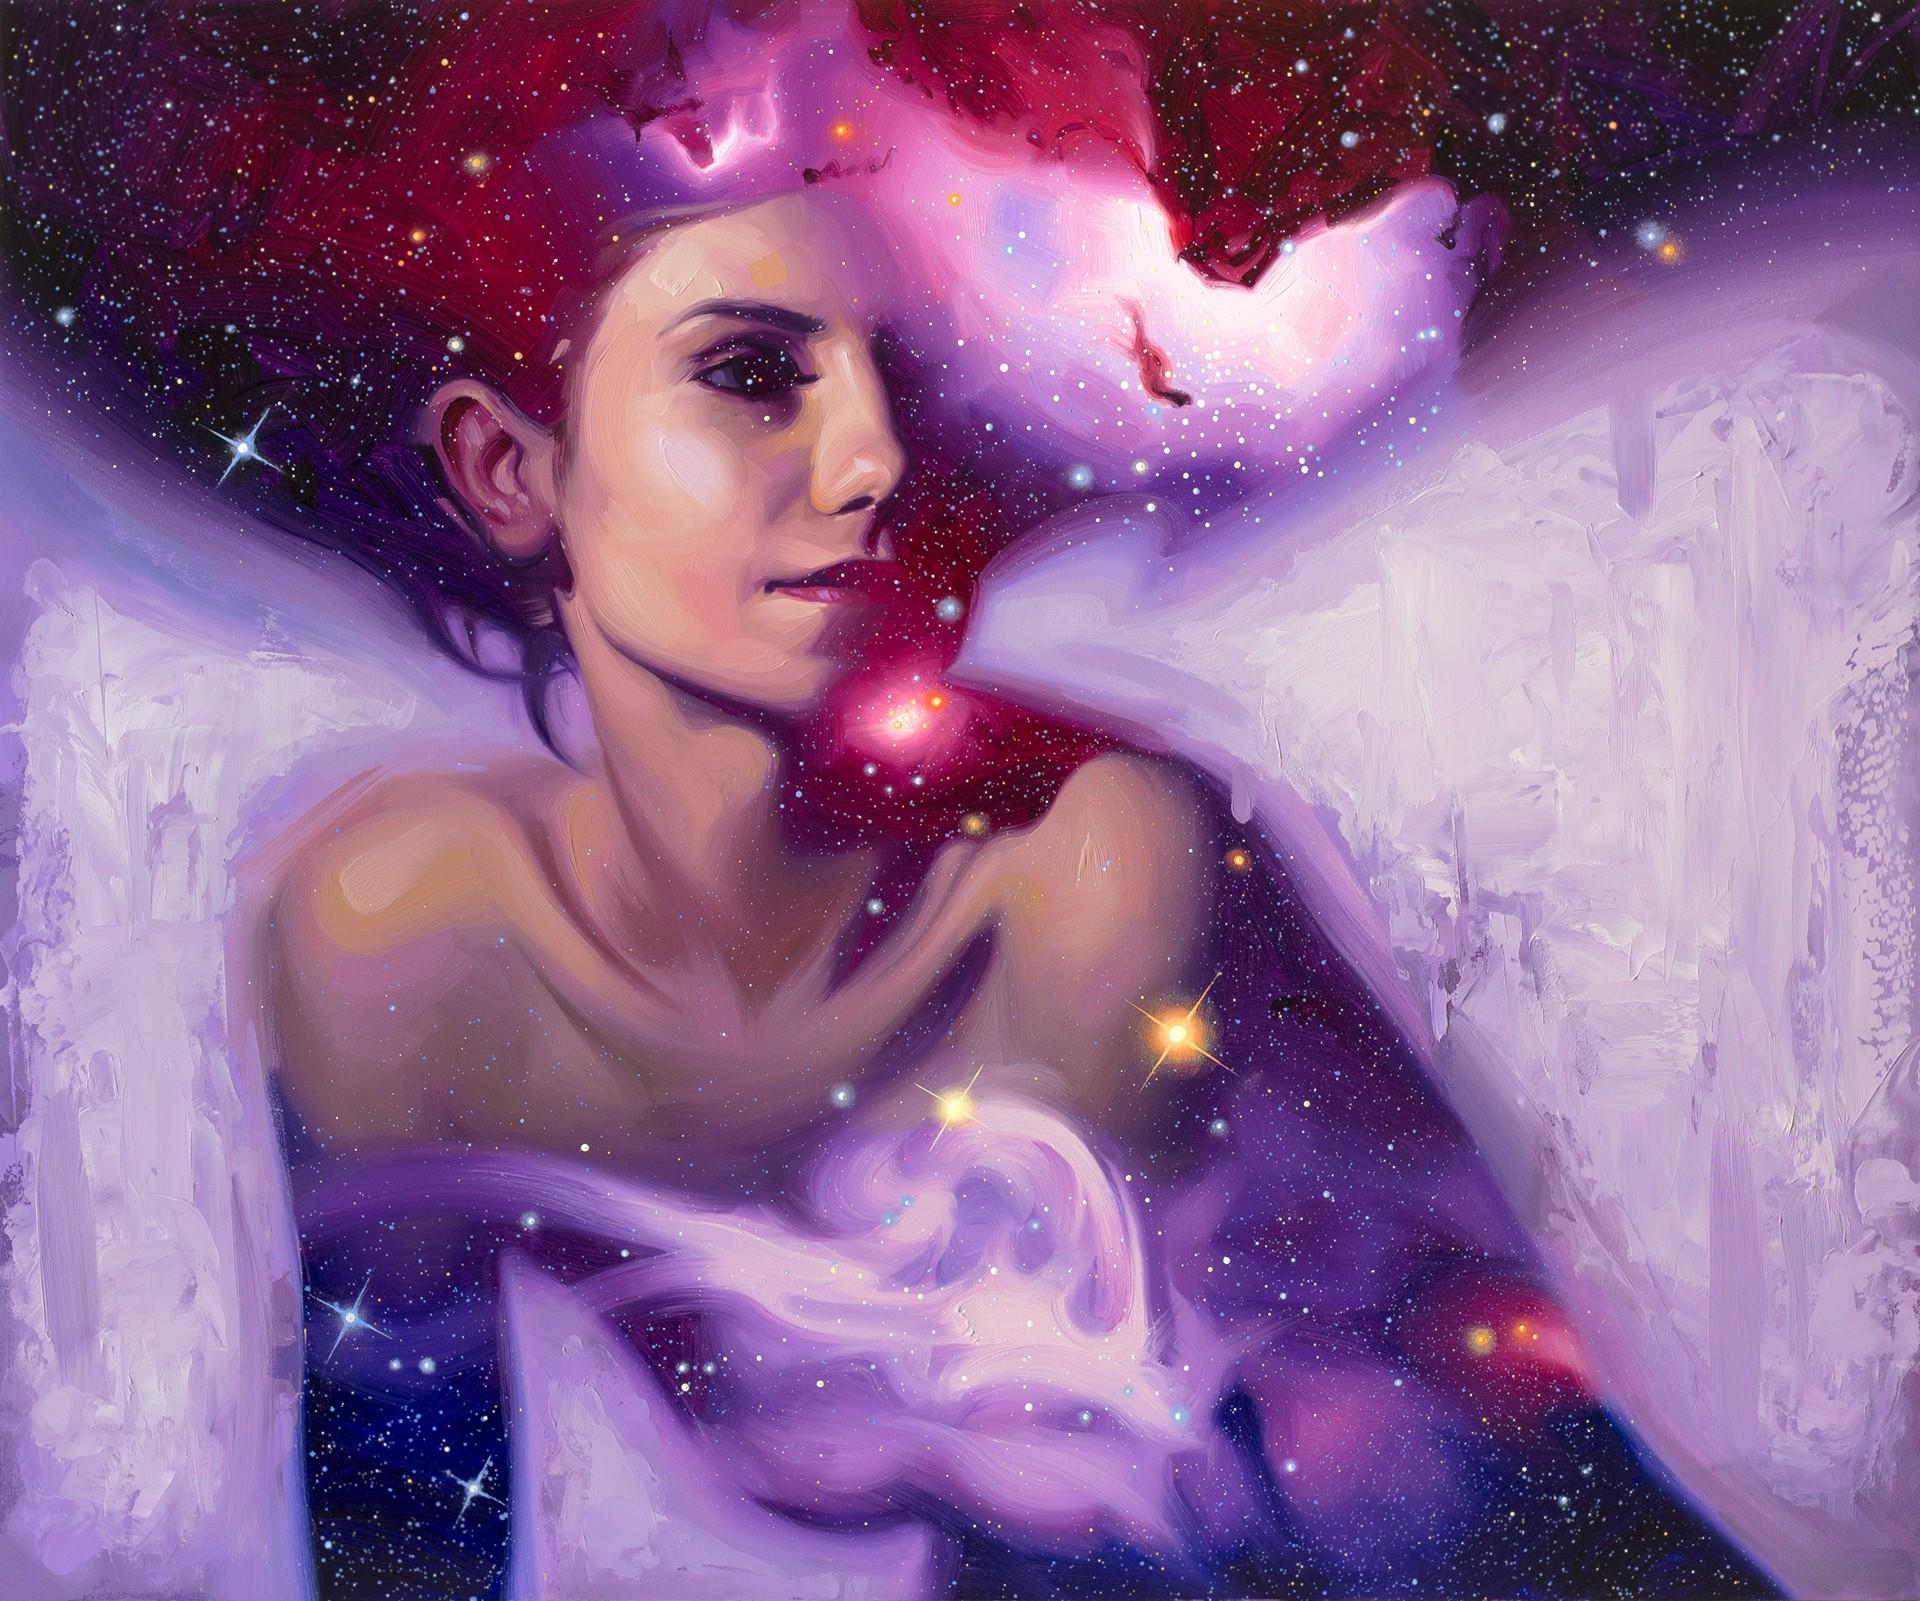 Stardust II - Art by Rob Rey 